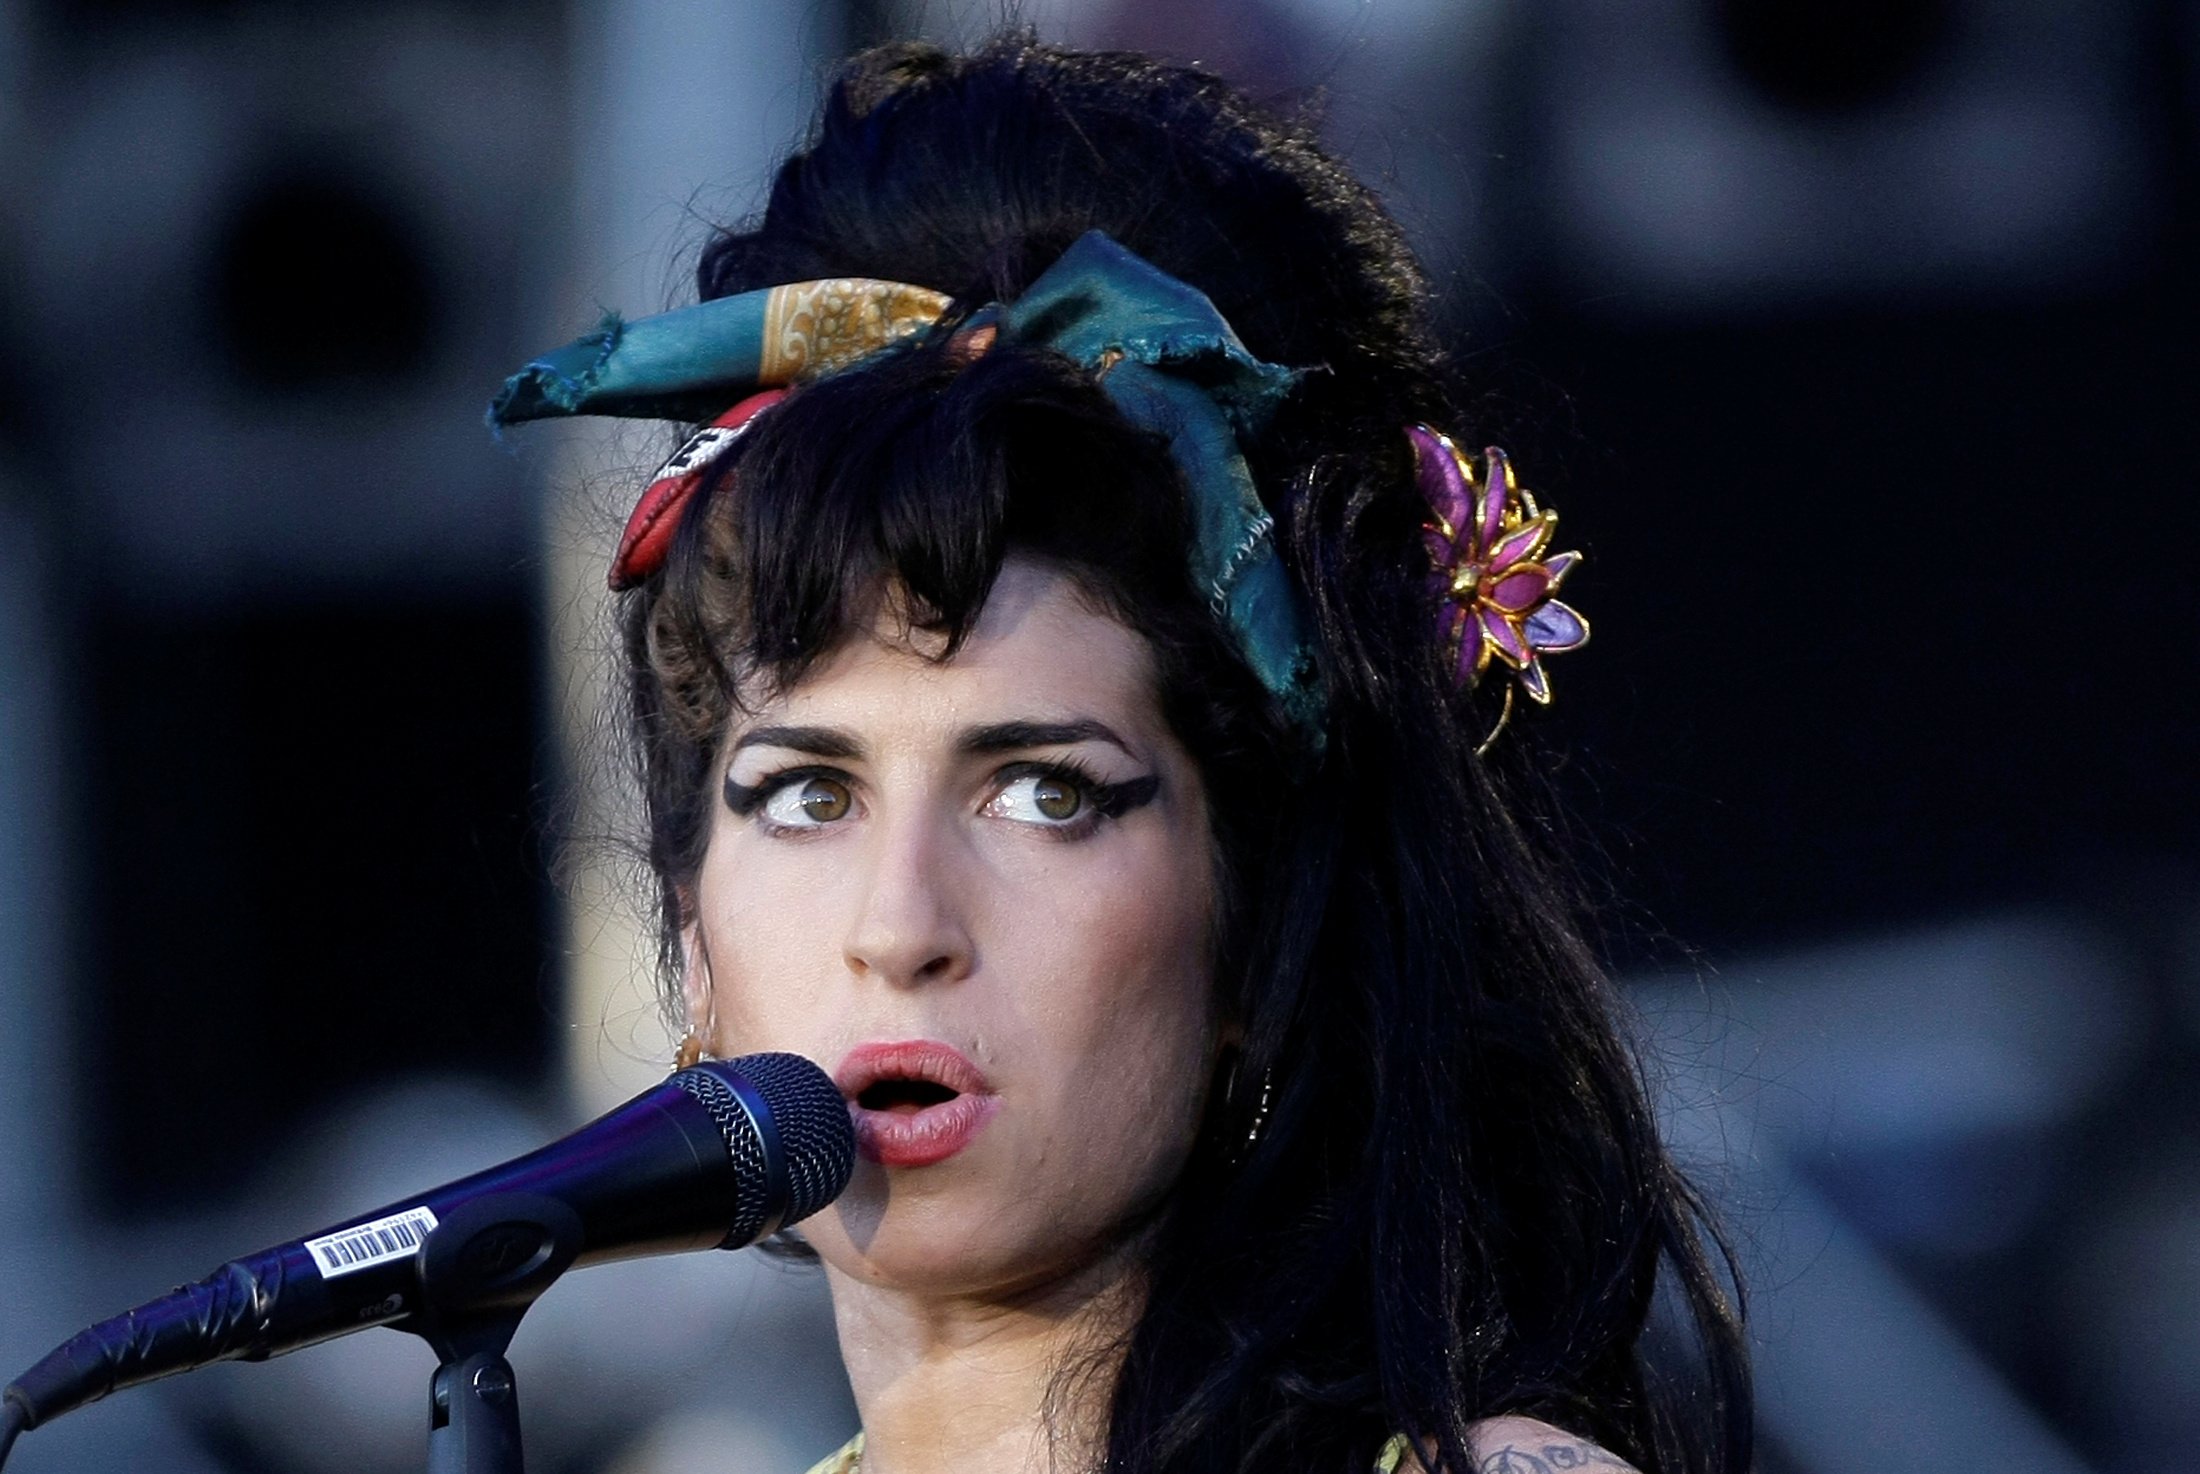 Amy Winehouse 2007 Concert To Be Released On Vinyl - Alt 98.7 FM